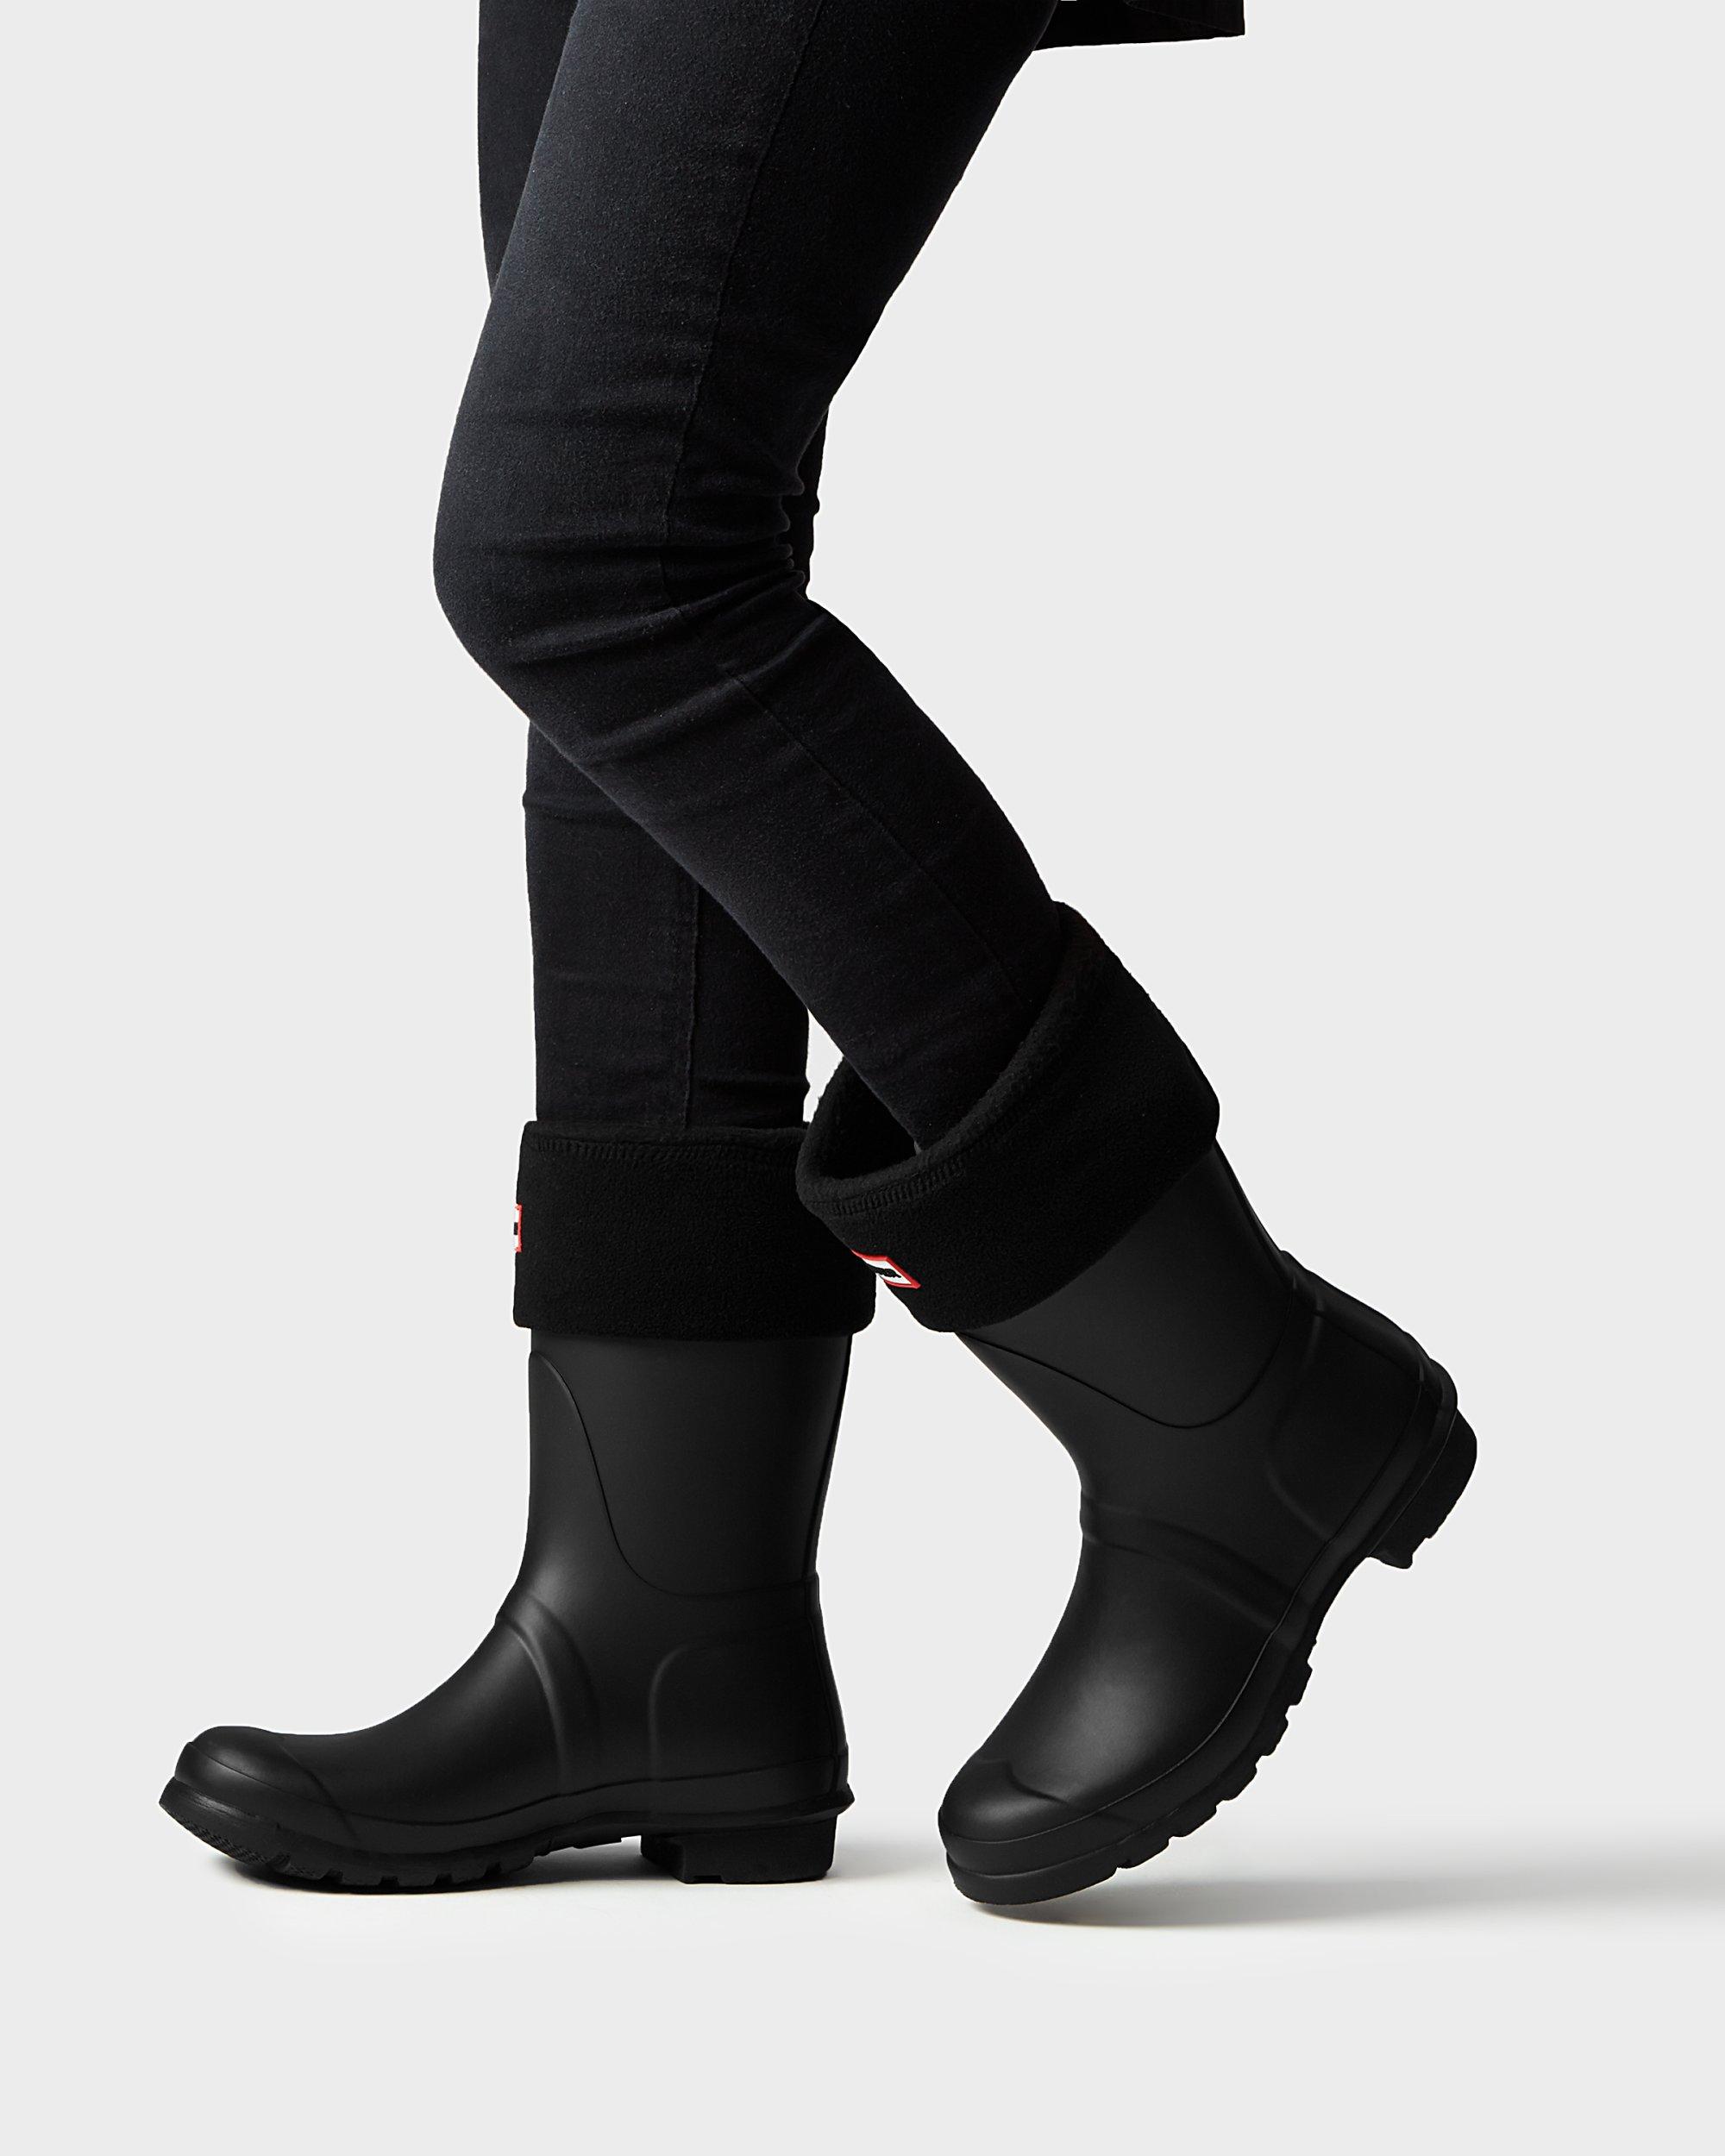 HUNTER Original Short Boot Socks in Black for Men - Lyst